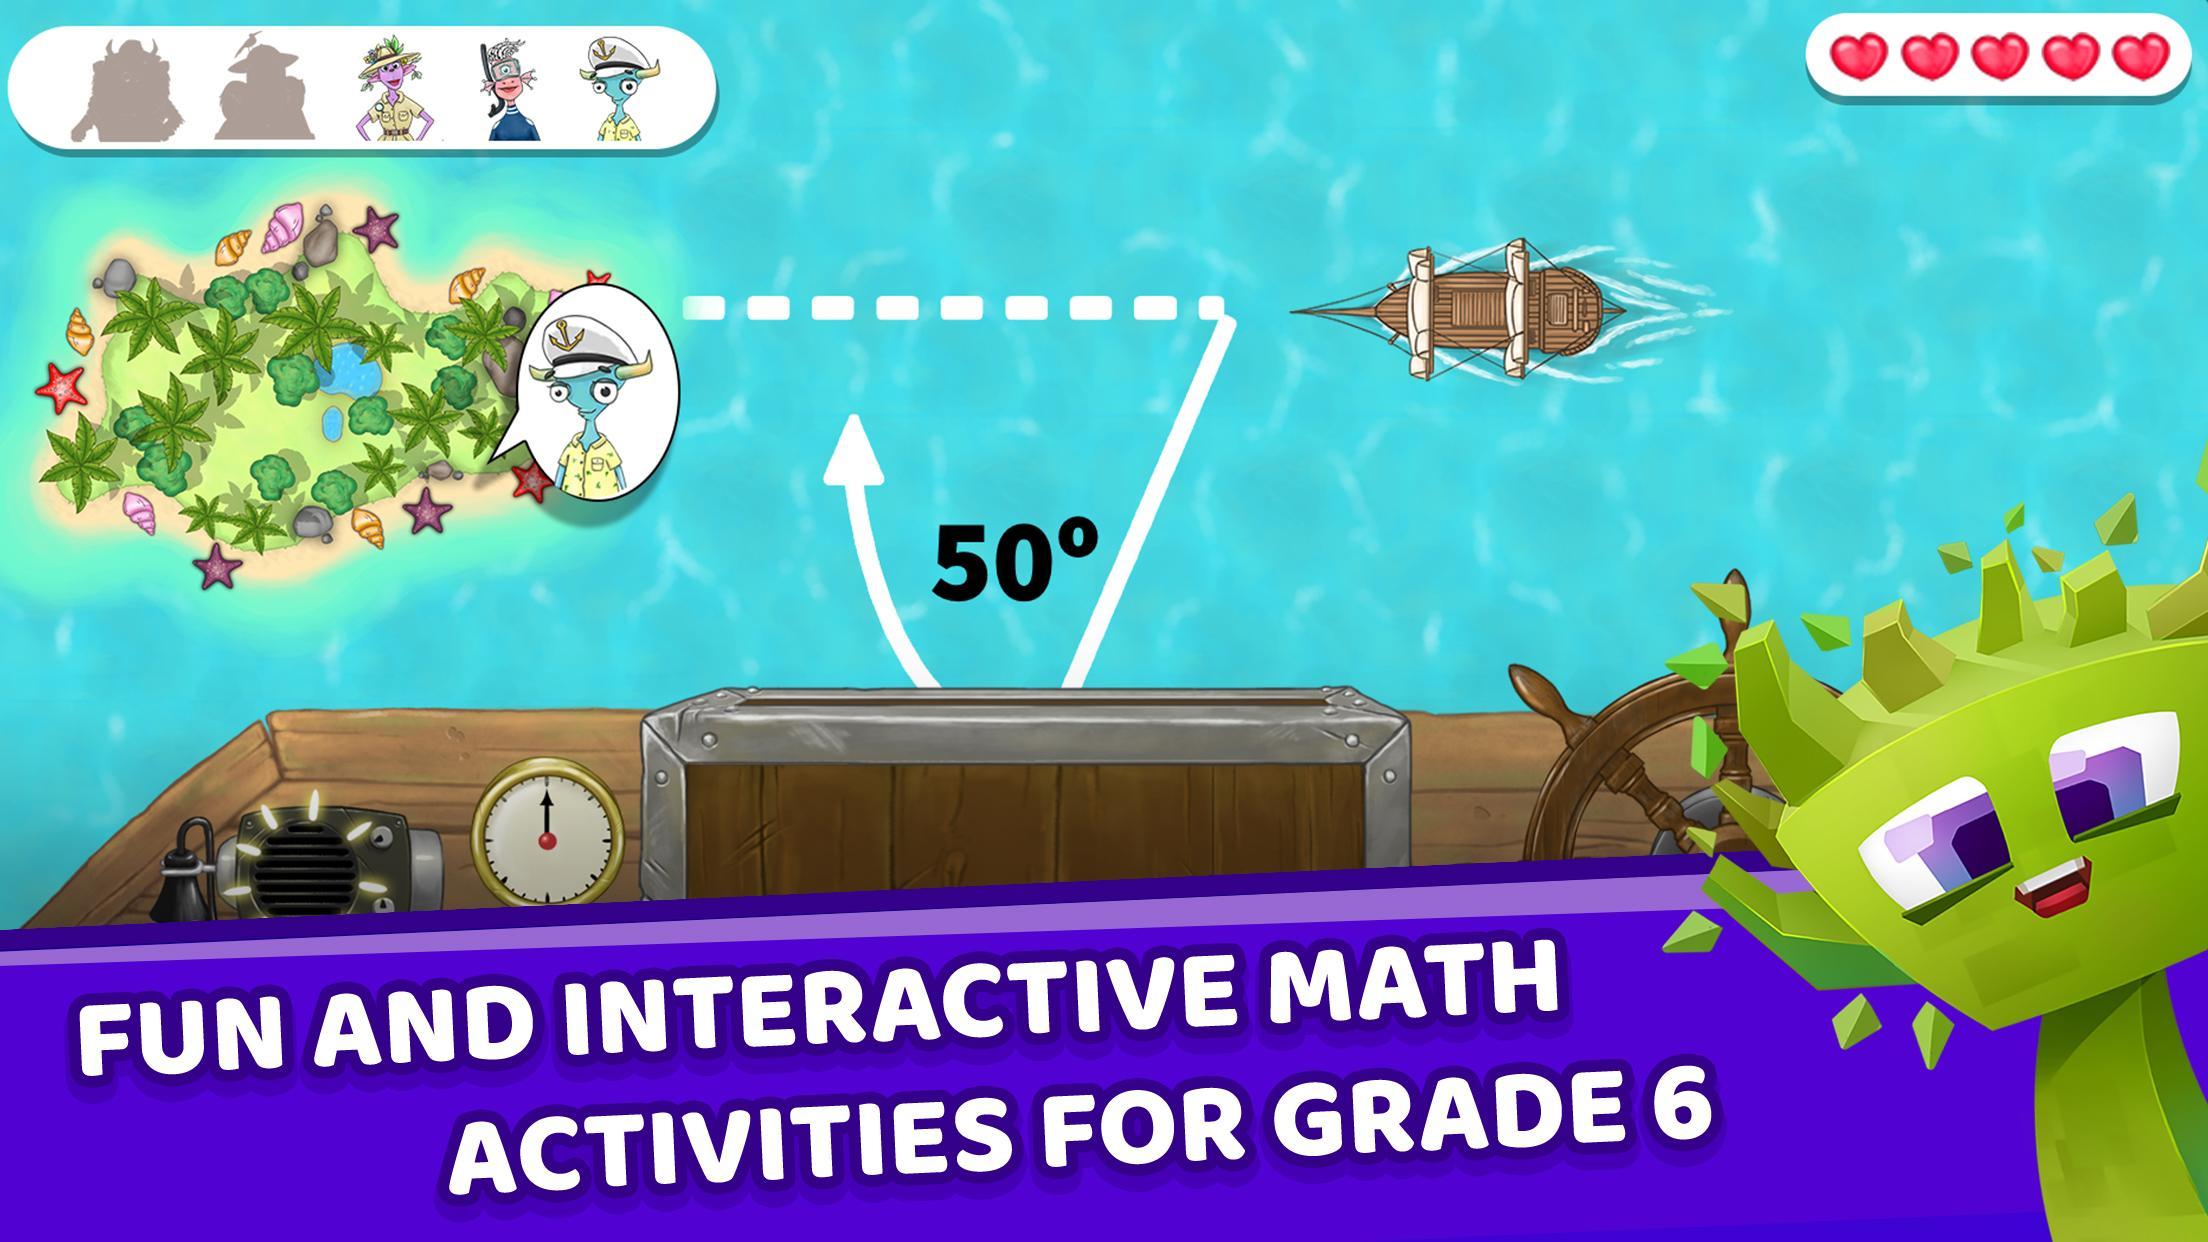 Matific Galaxy - Maths Games for 6th Graders 2.2.2 Screenshot 3